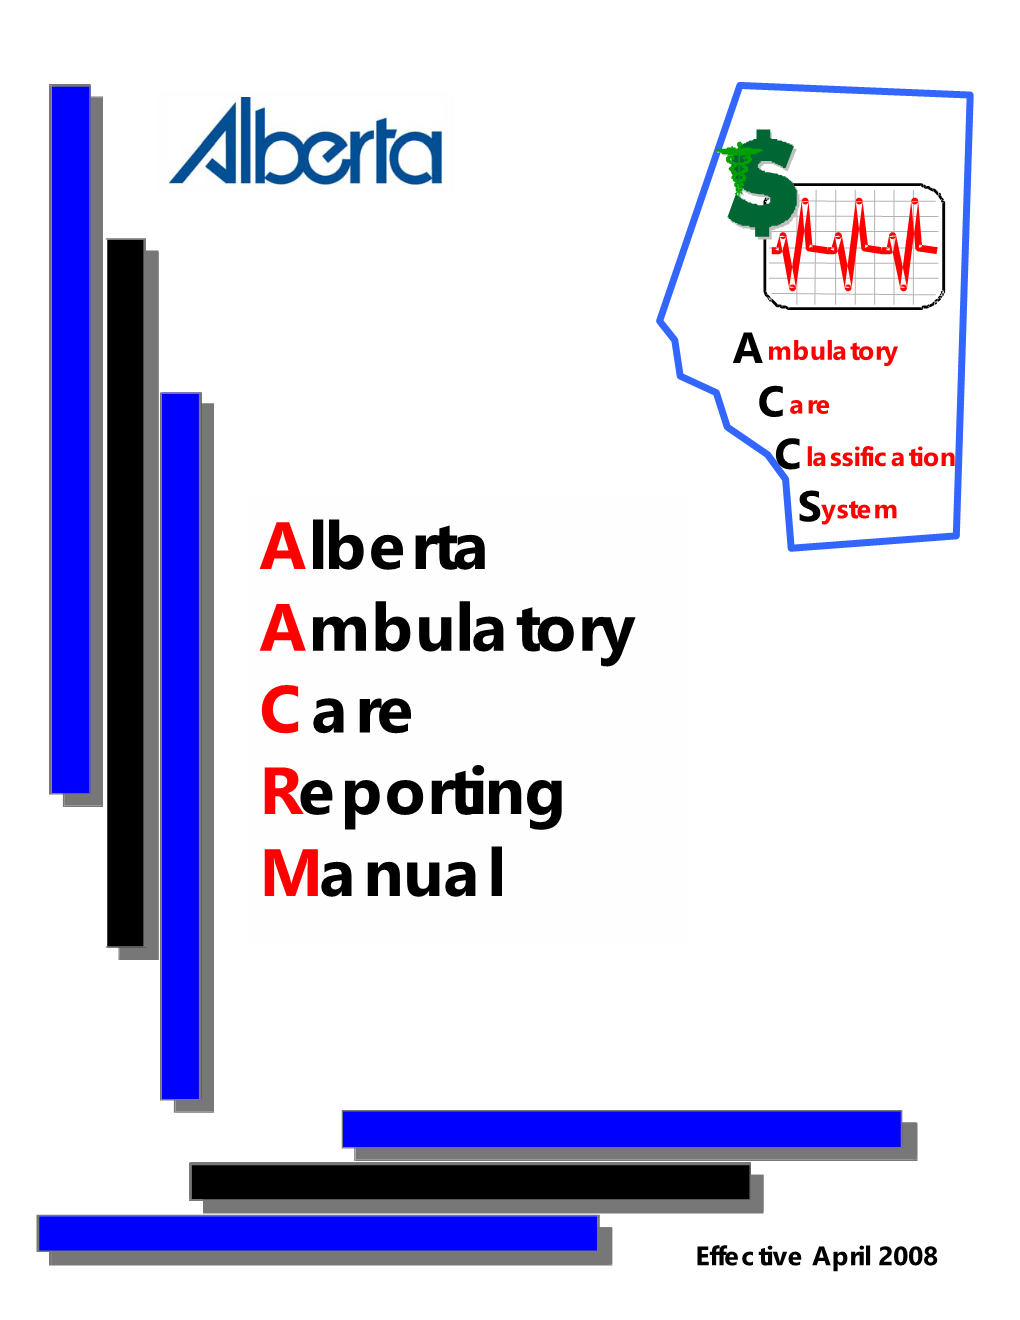 Alberta Ambulatory Care Reporting Manual. Sections 0 to 7